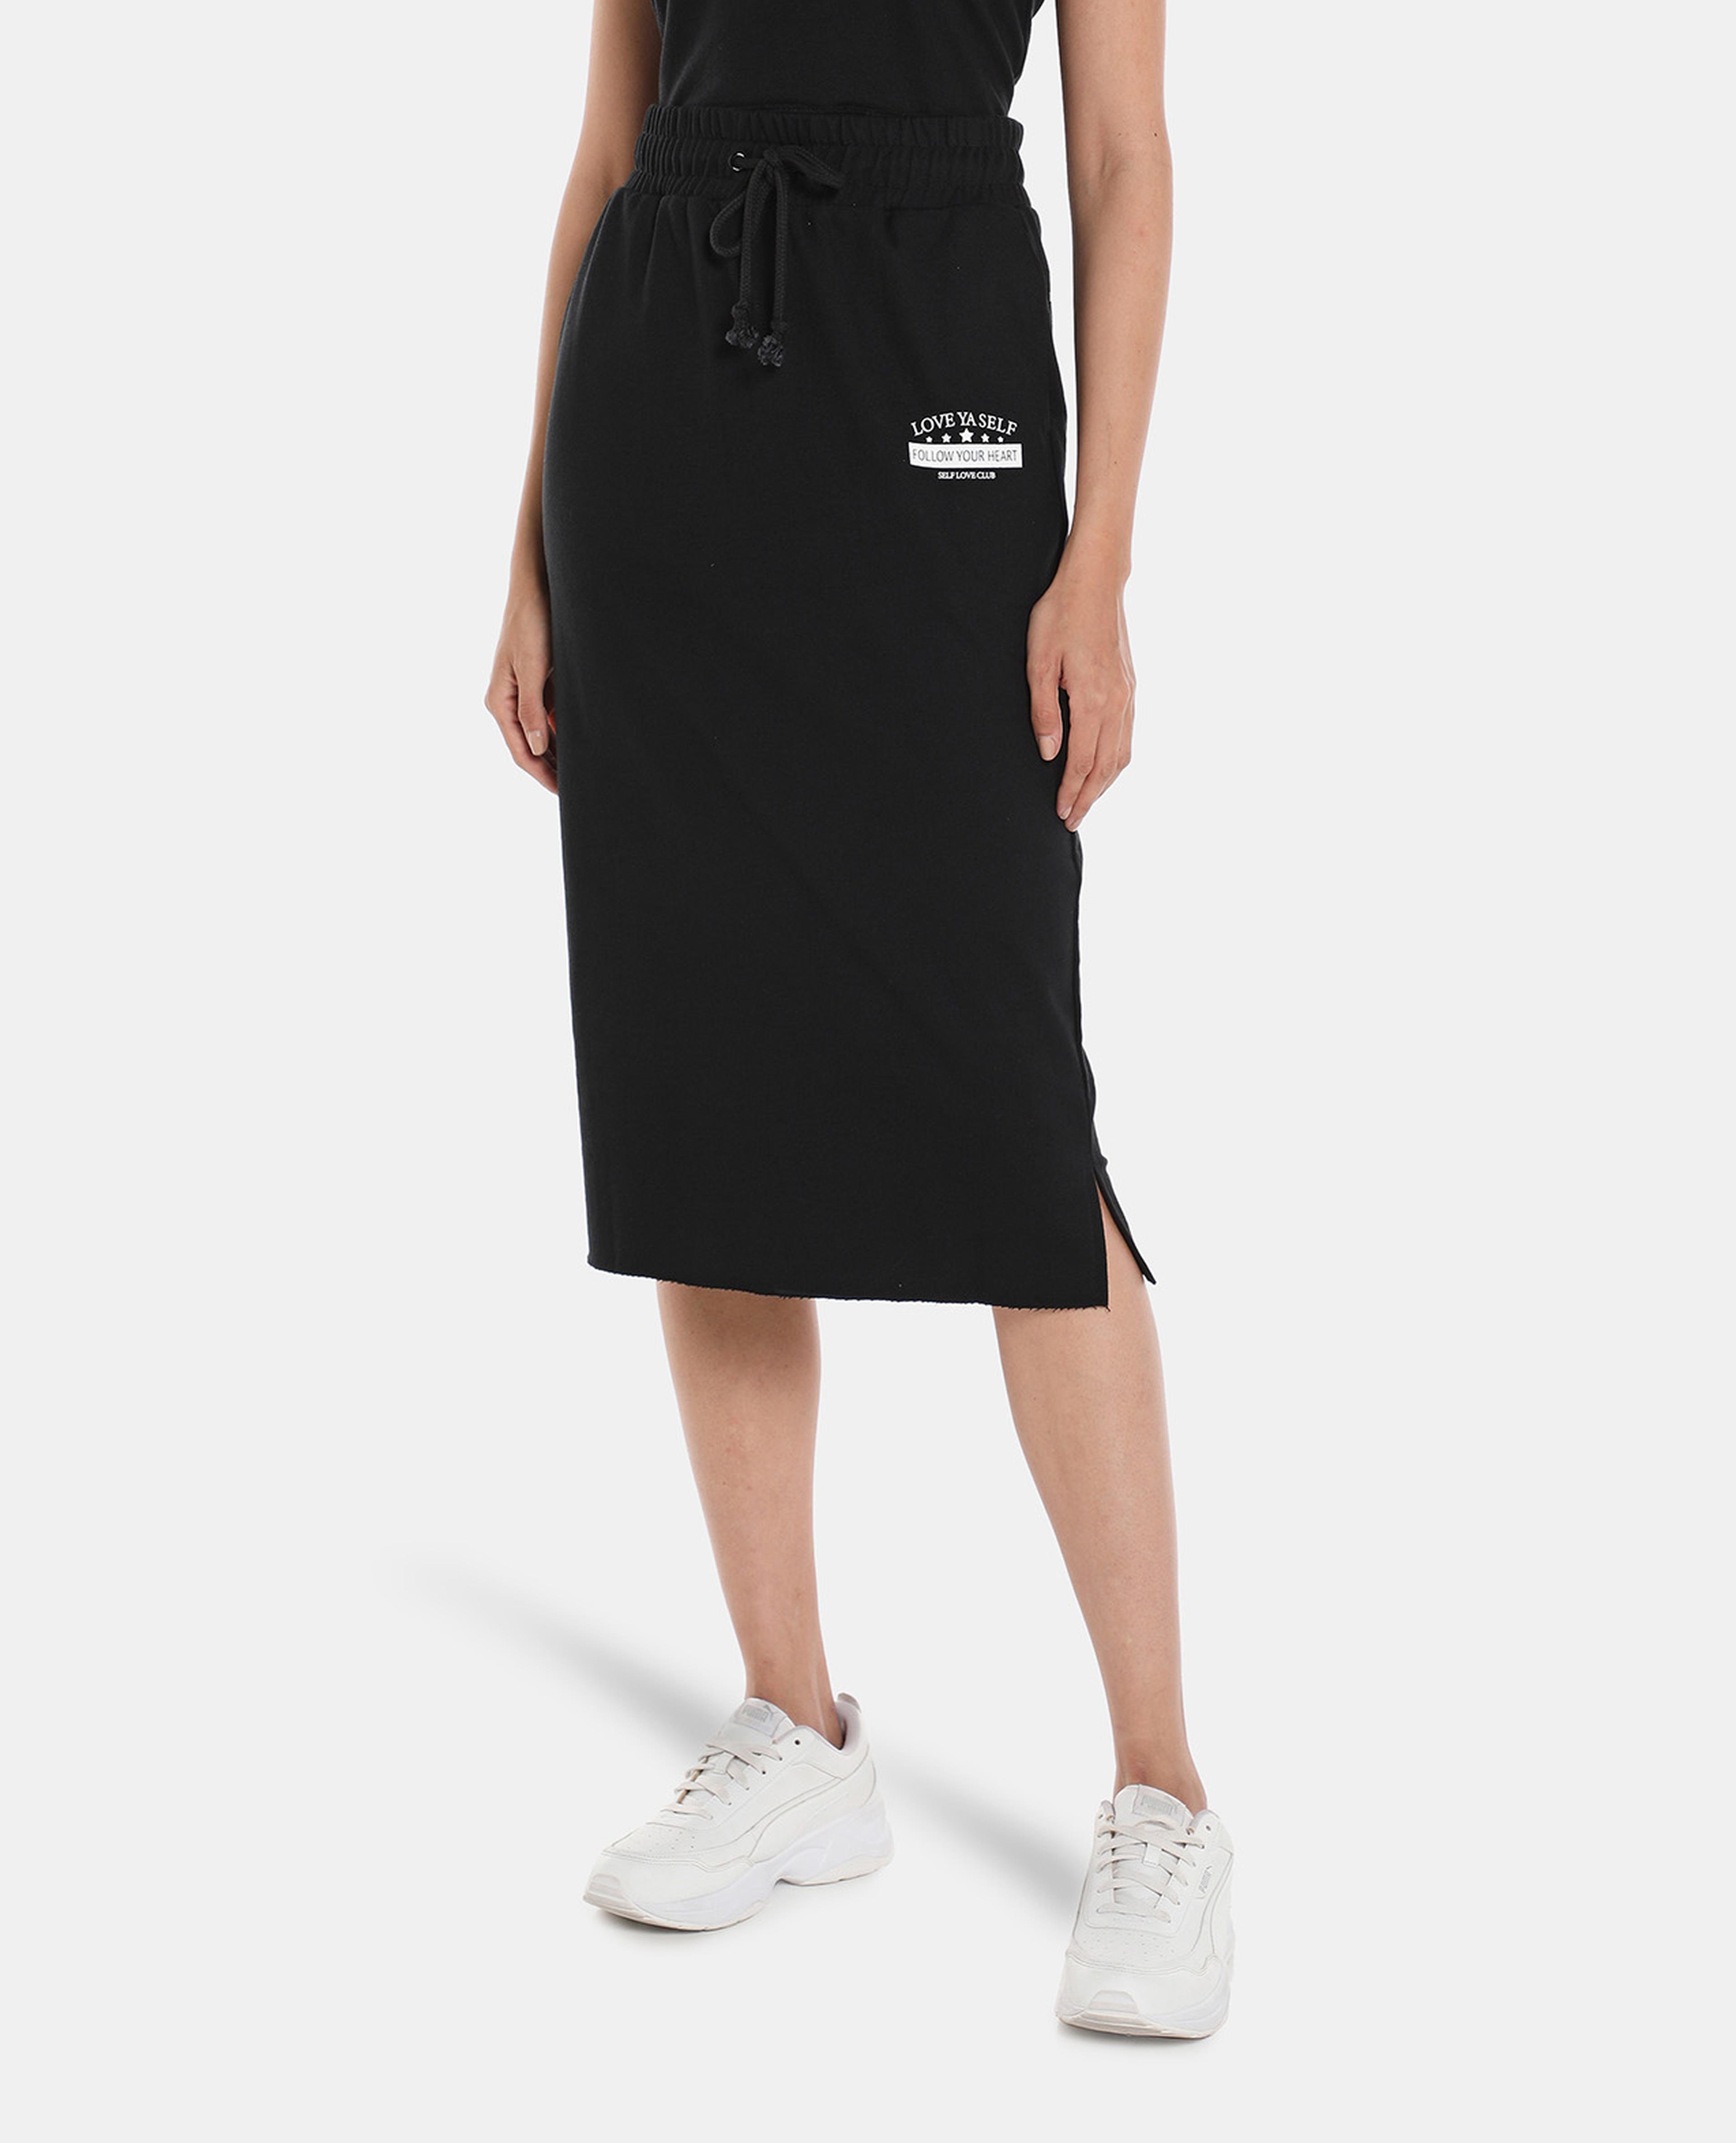 Black Printed Casual Knee Length Skirt